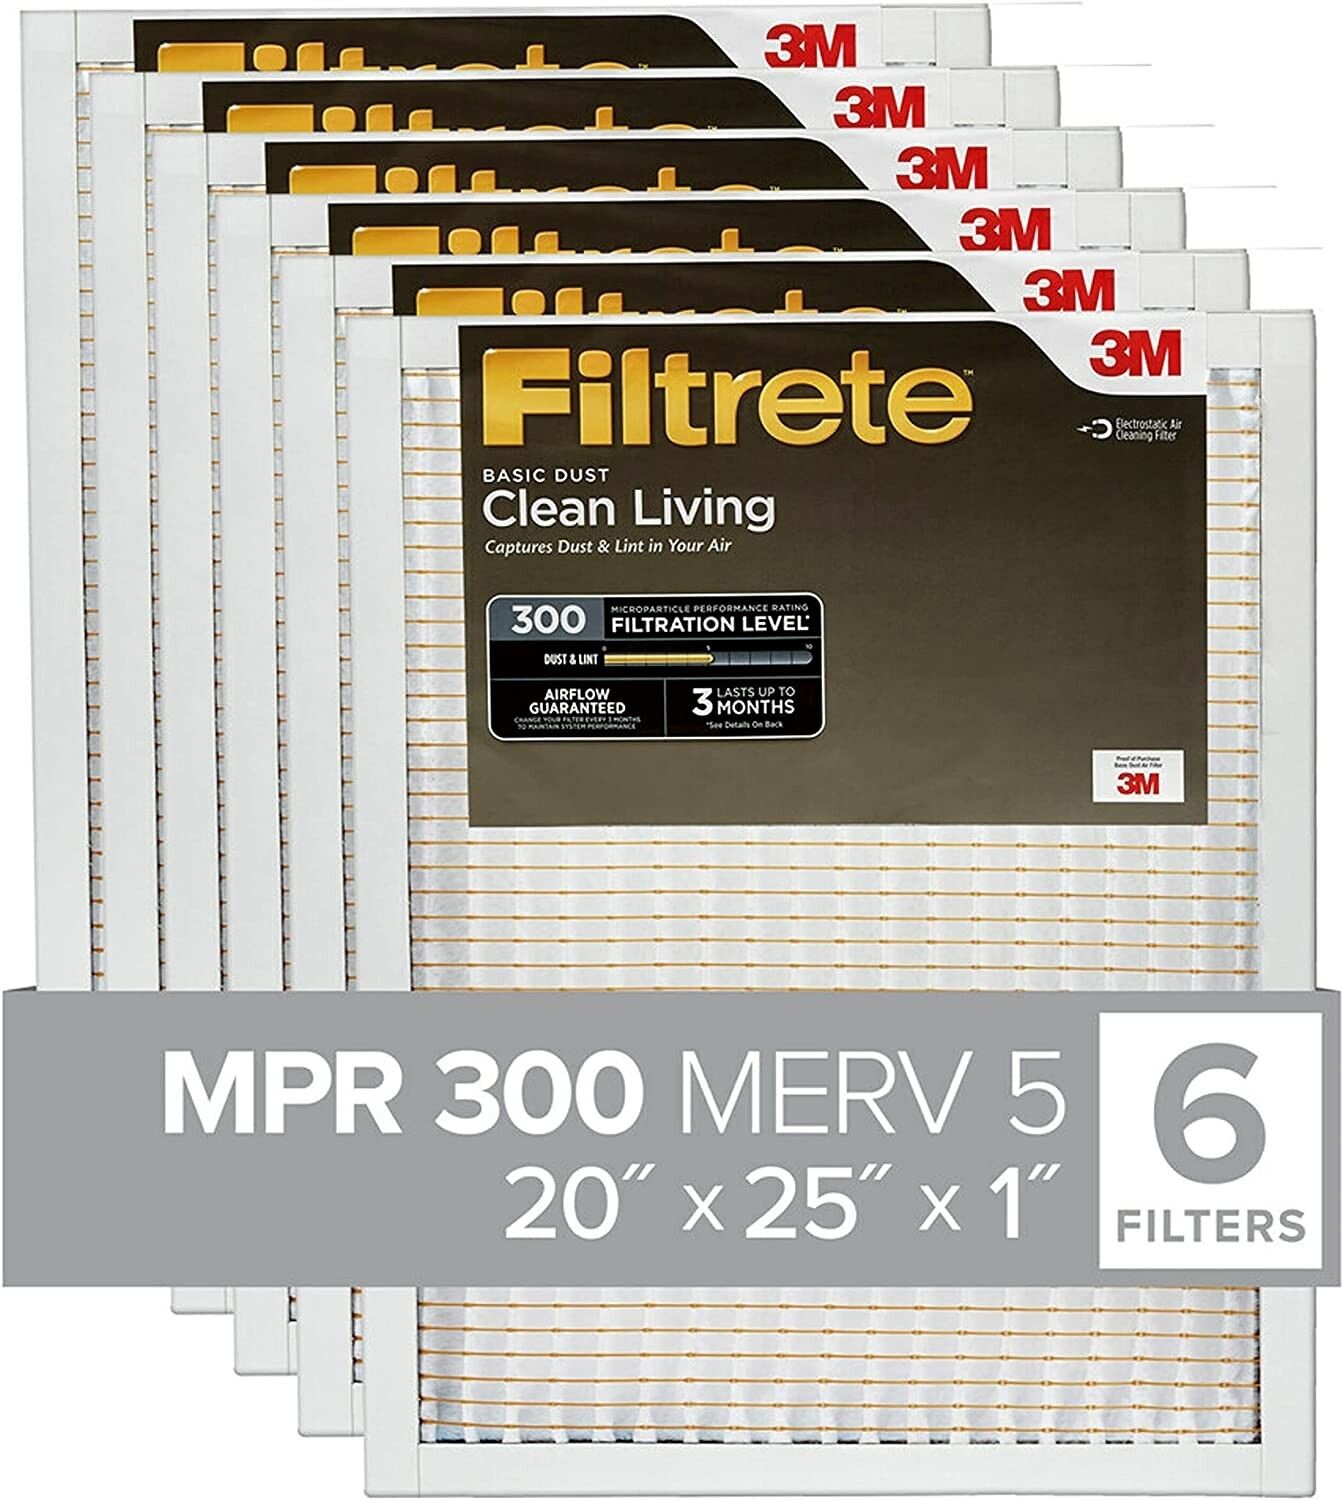 Filtrete 20x25x1 Air Filter MPR 300 MERV 5, Clean Living Basic Dust, 6-Pack